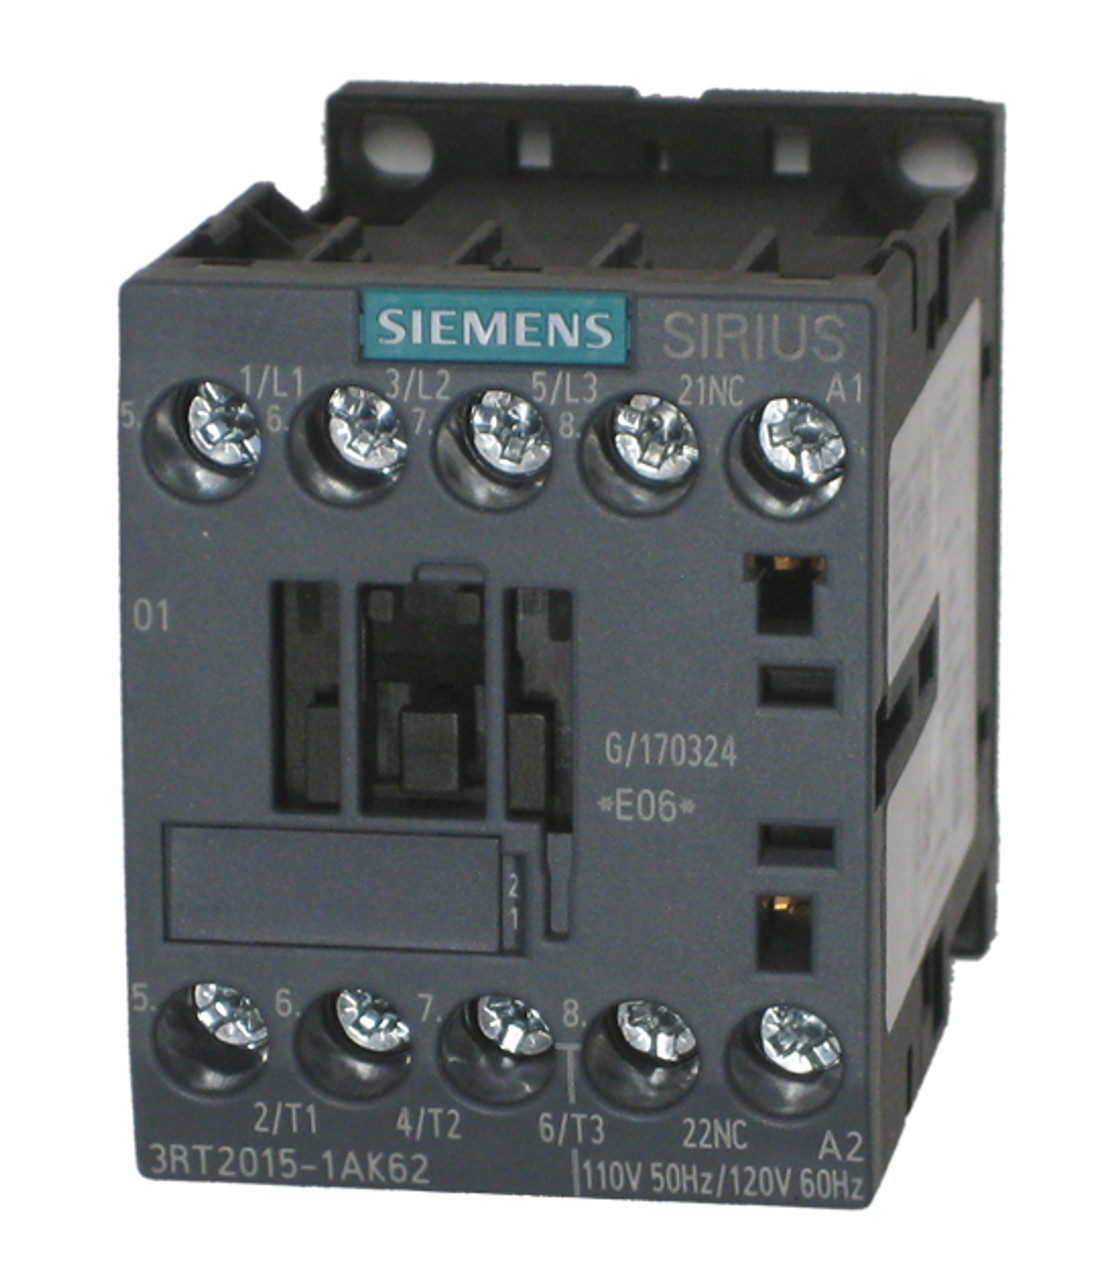 Siemens 3RT2015-1AK62 electrical contactor